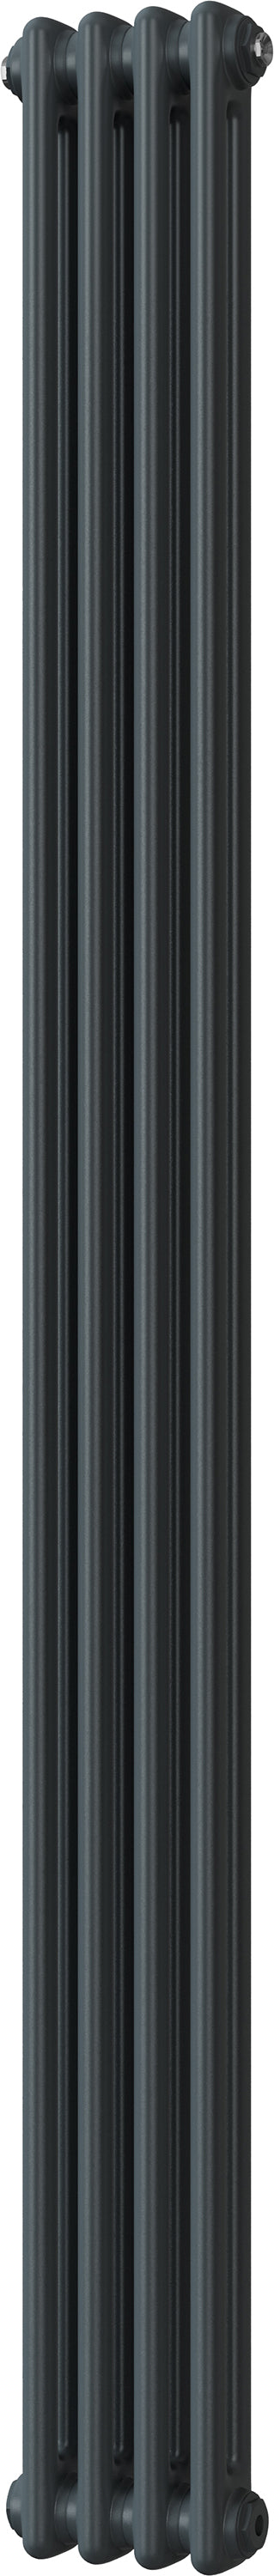 Alpha - Anthracite Vertical Column Radiator H1800mm x W196mm 2 Column